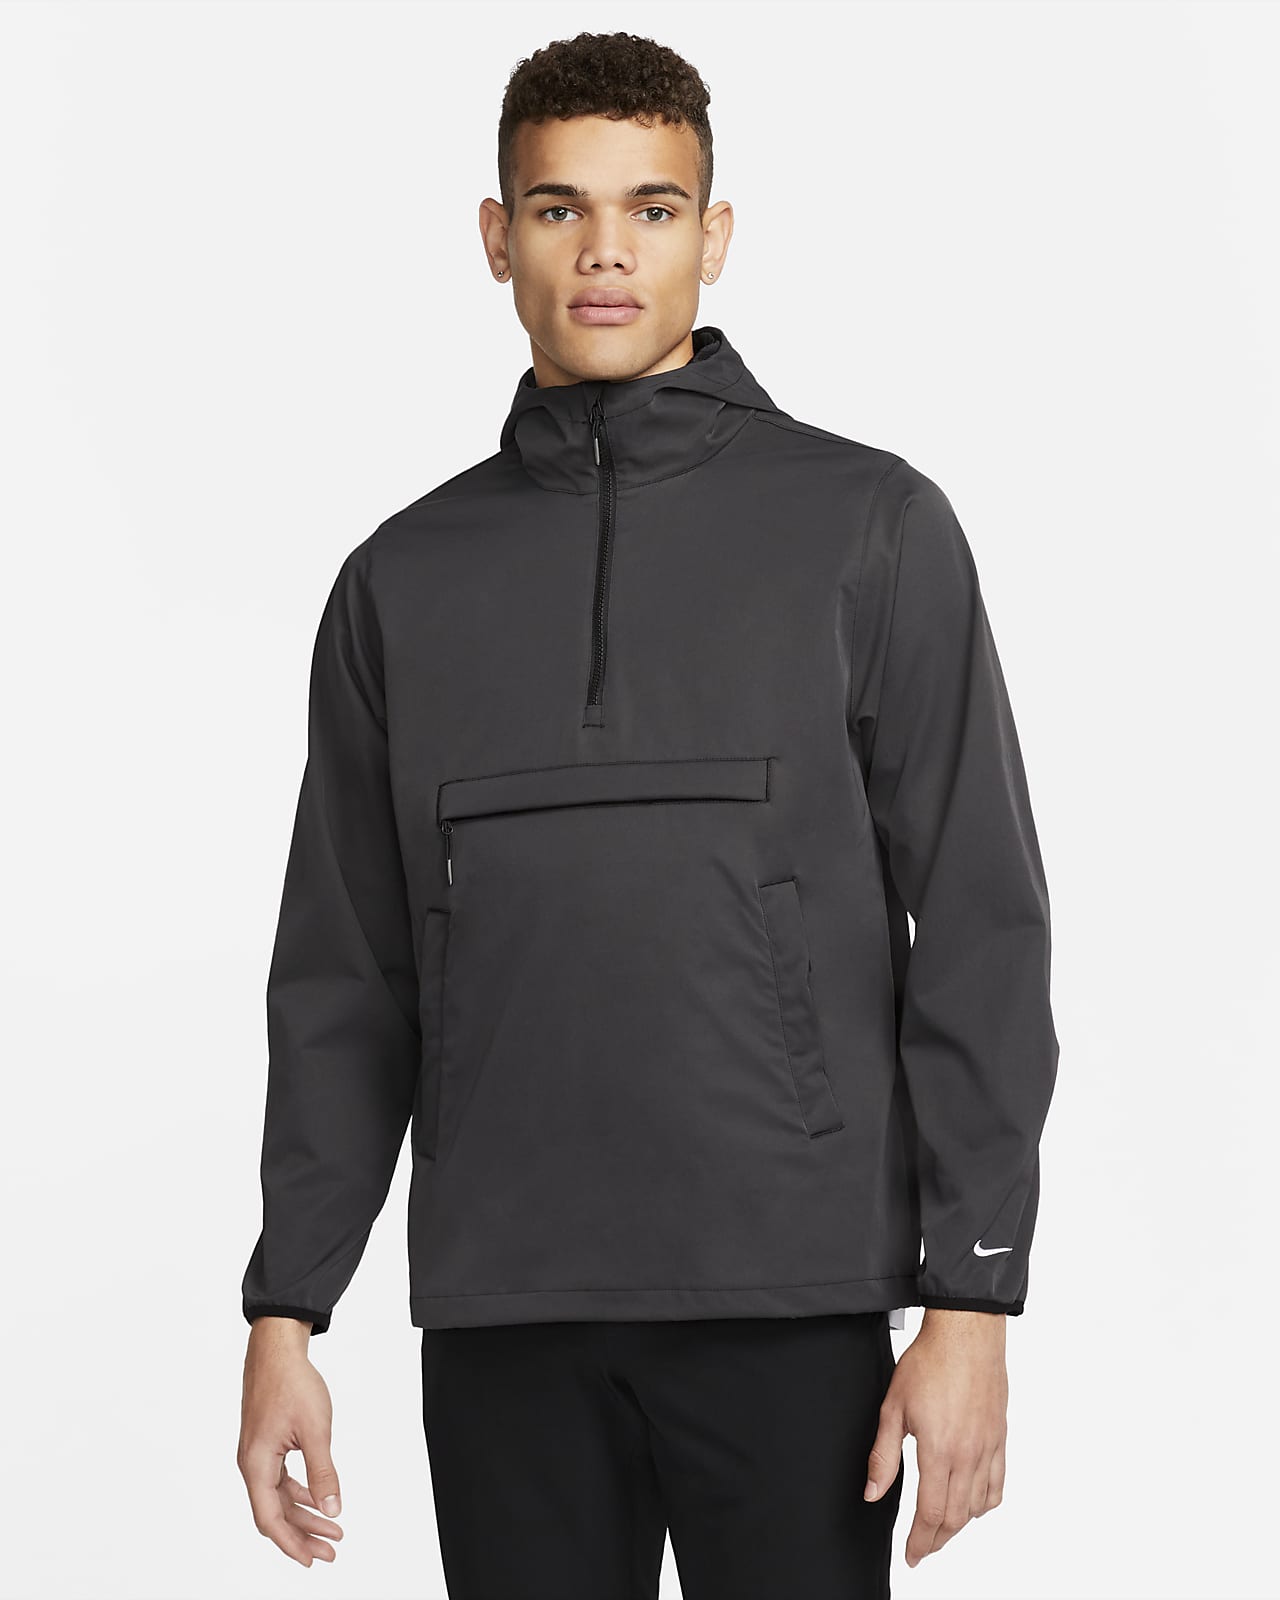 Nike Unscripted Men's Anorak Golf Jacket. Nike LU